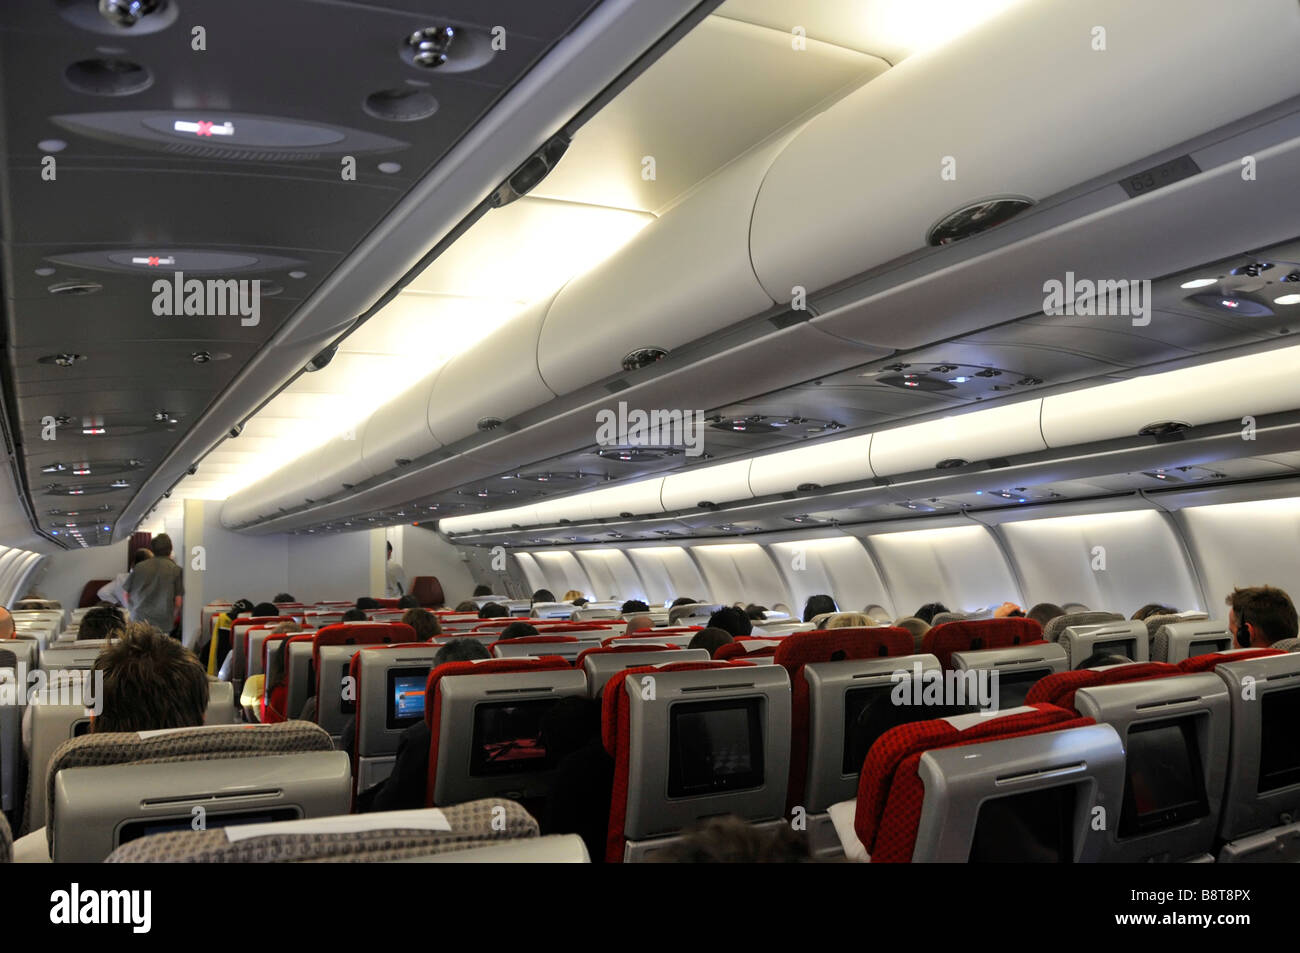 Travel by passenger plane interiors Virgin Atlantic Airbus jet airplane cabin passengers inflight TV entertainment movie film screen on back of seats Stock Photo